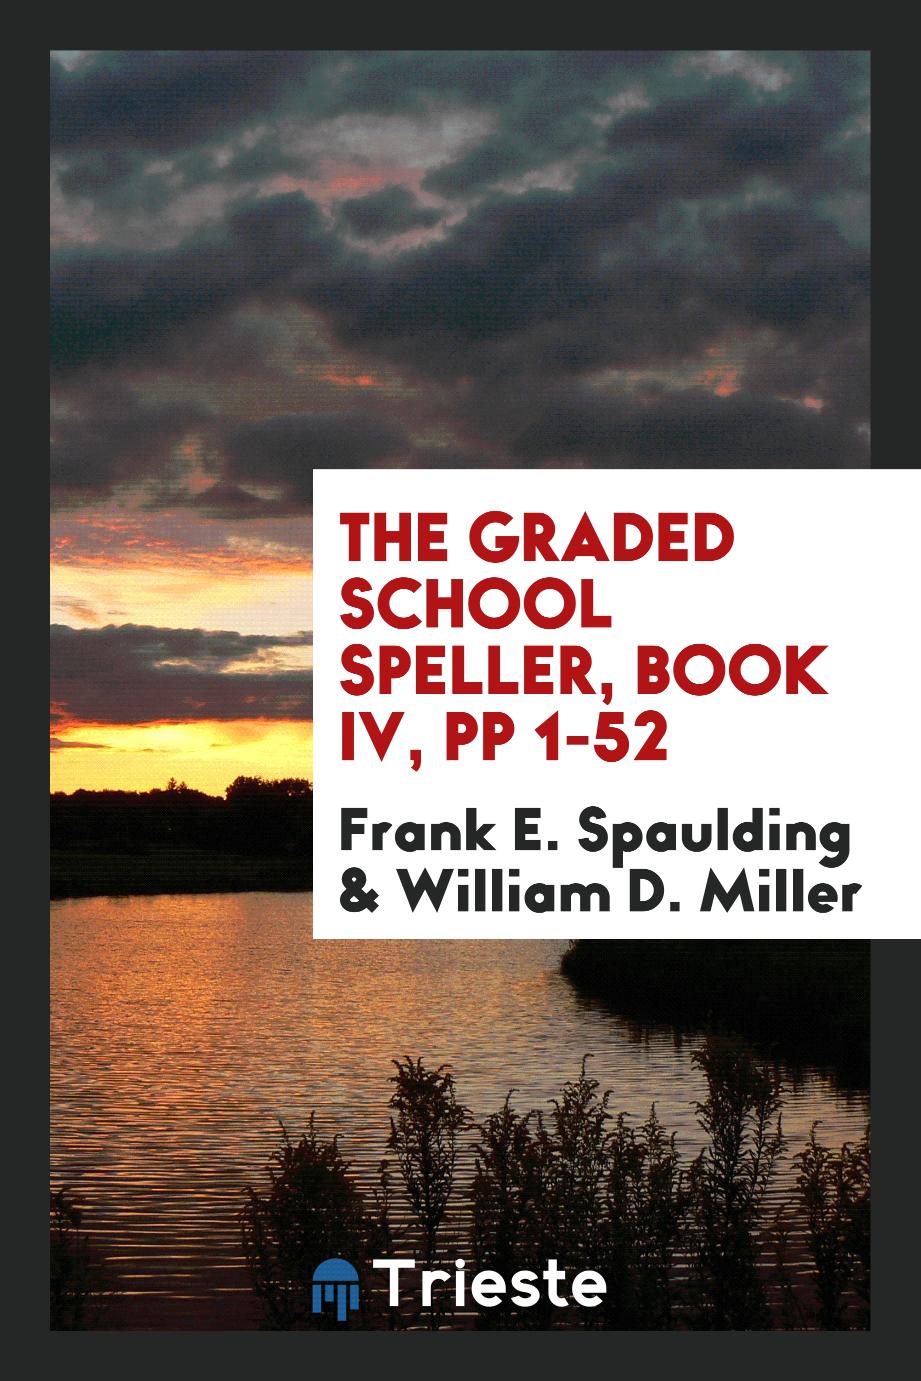 The Graded School Speller, Book IV, pp 1-52